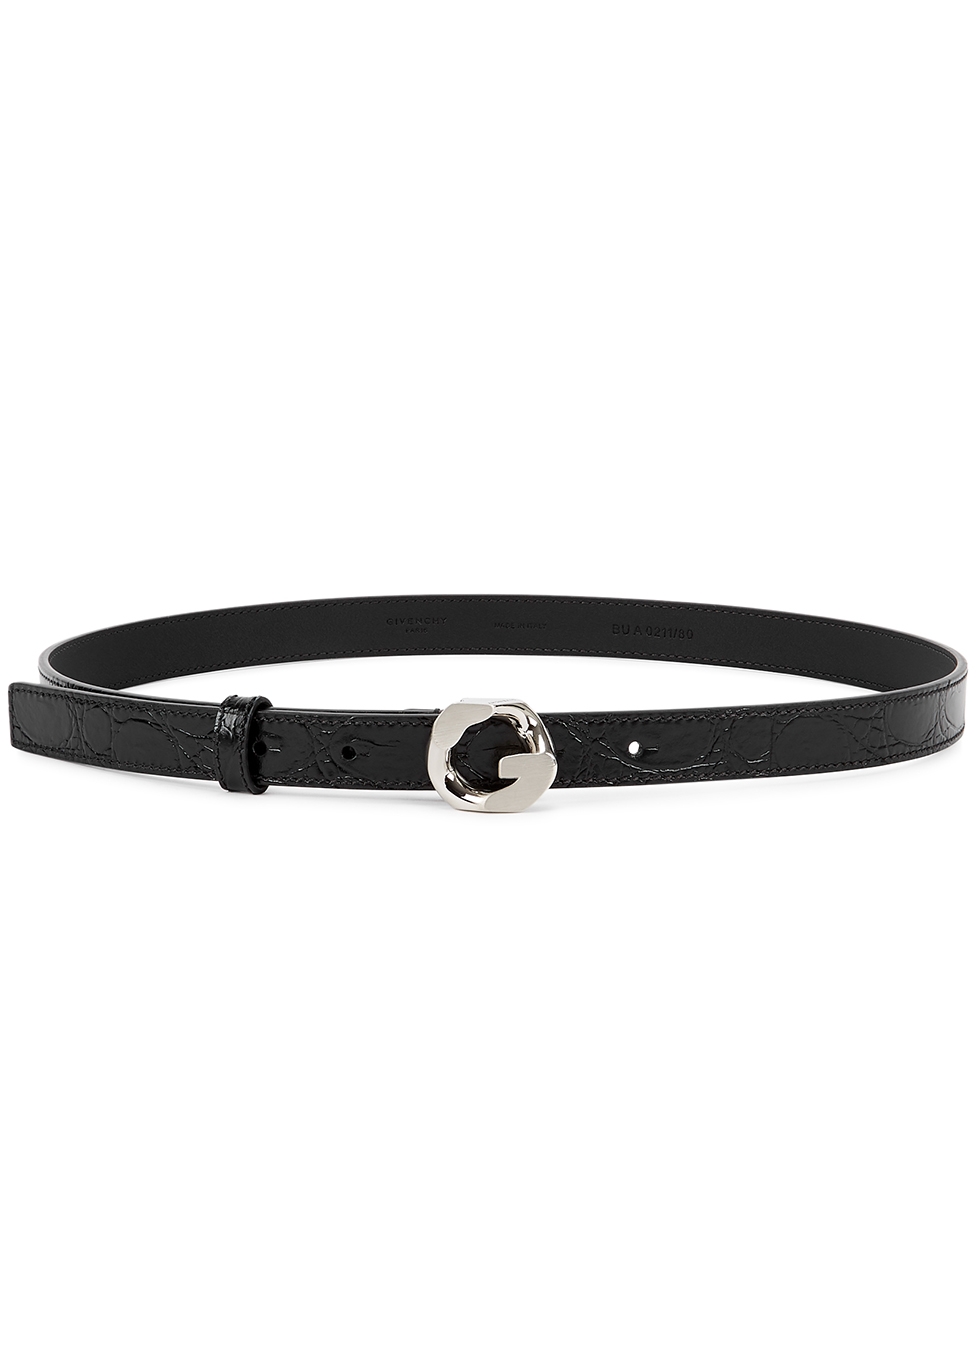 Givenchy G Chain black leather belt - Harvey Nichols